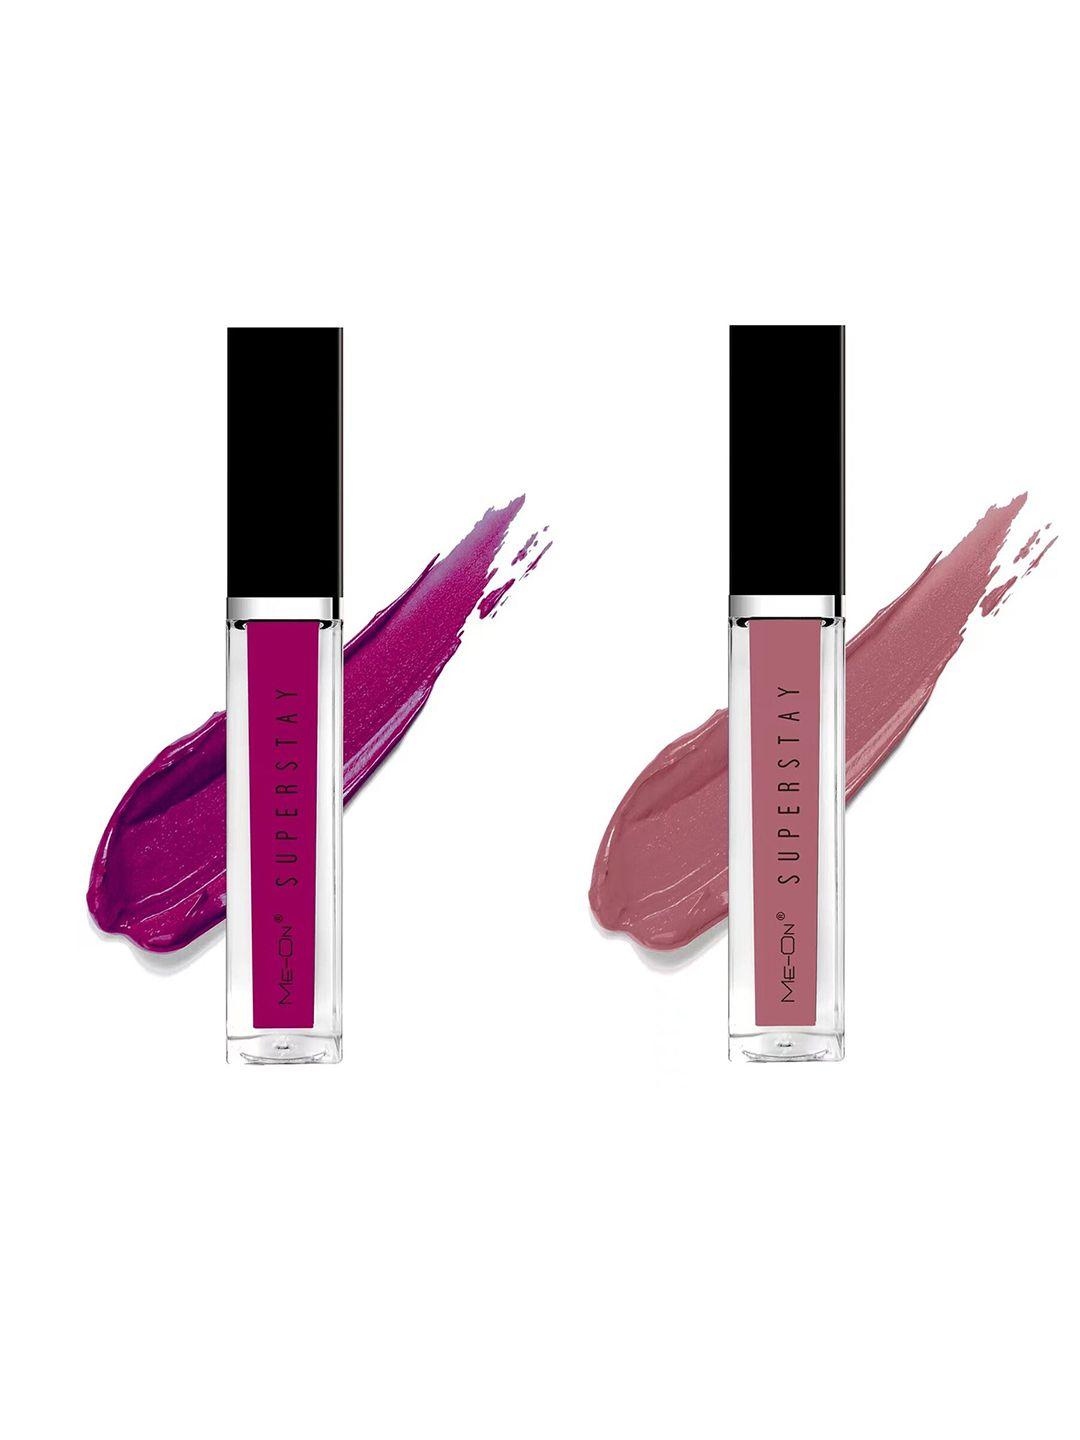 me-on set of 2 super stay lip gloss 6ml each - purple affair 16 & kinda sexy 22